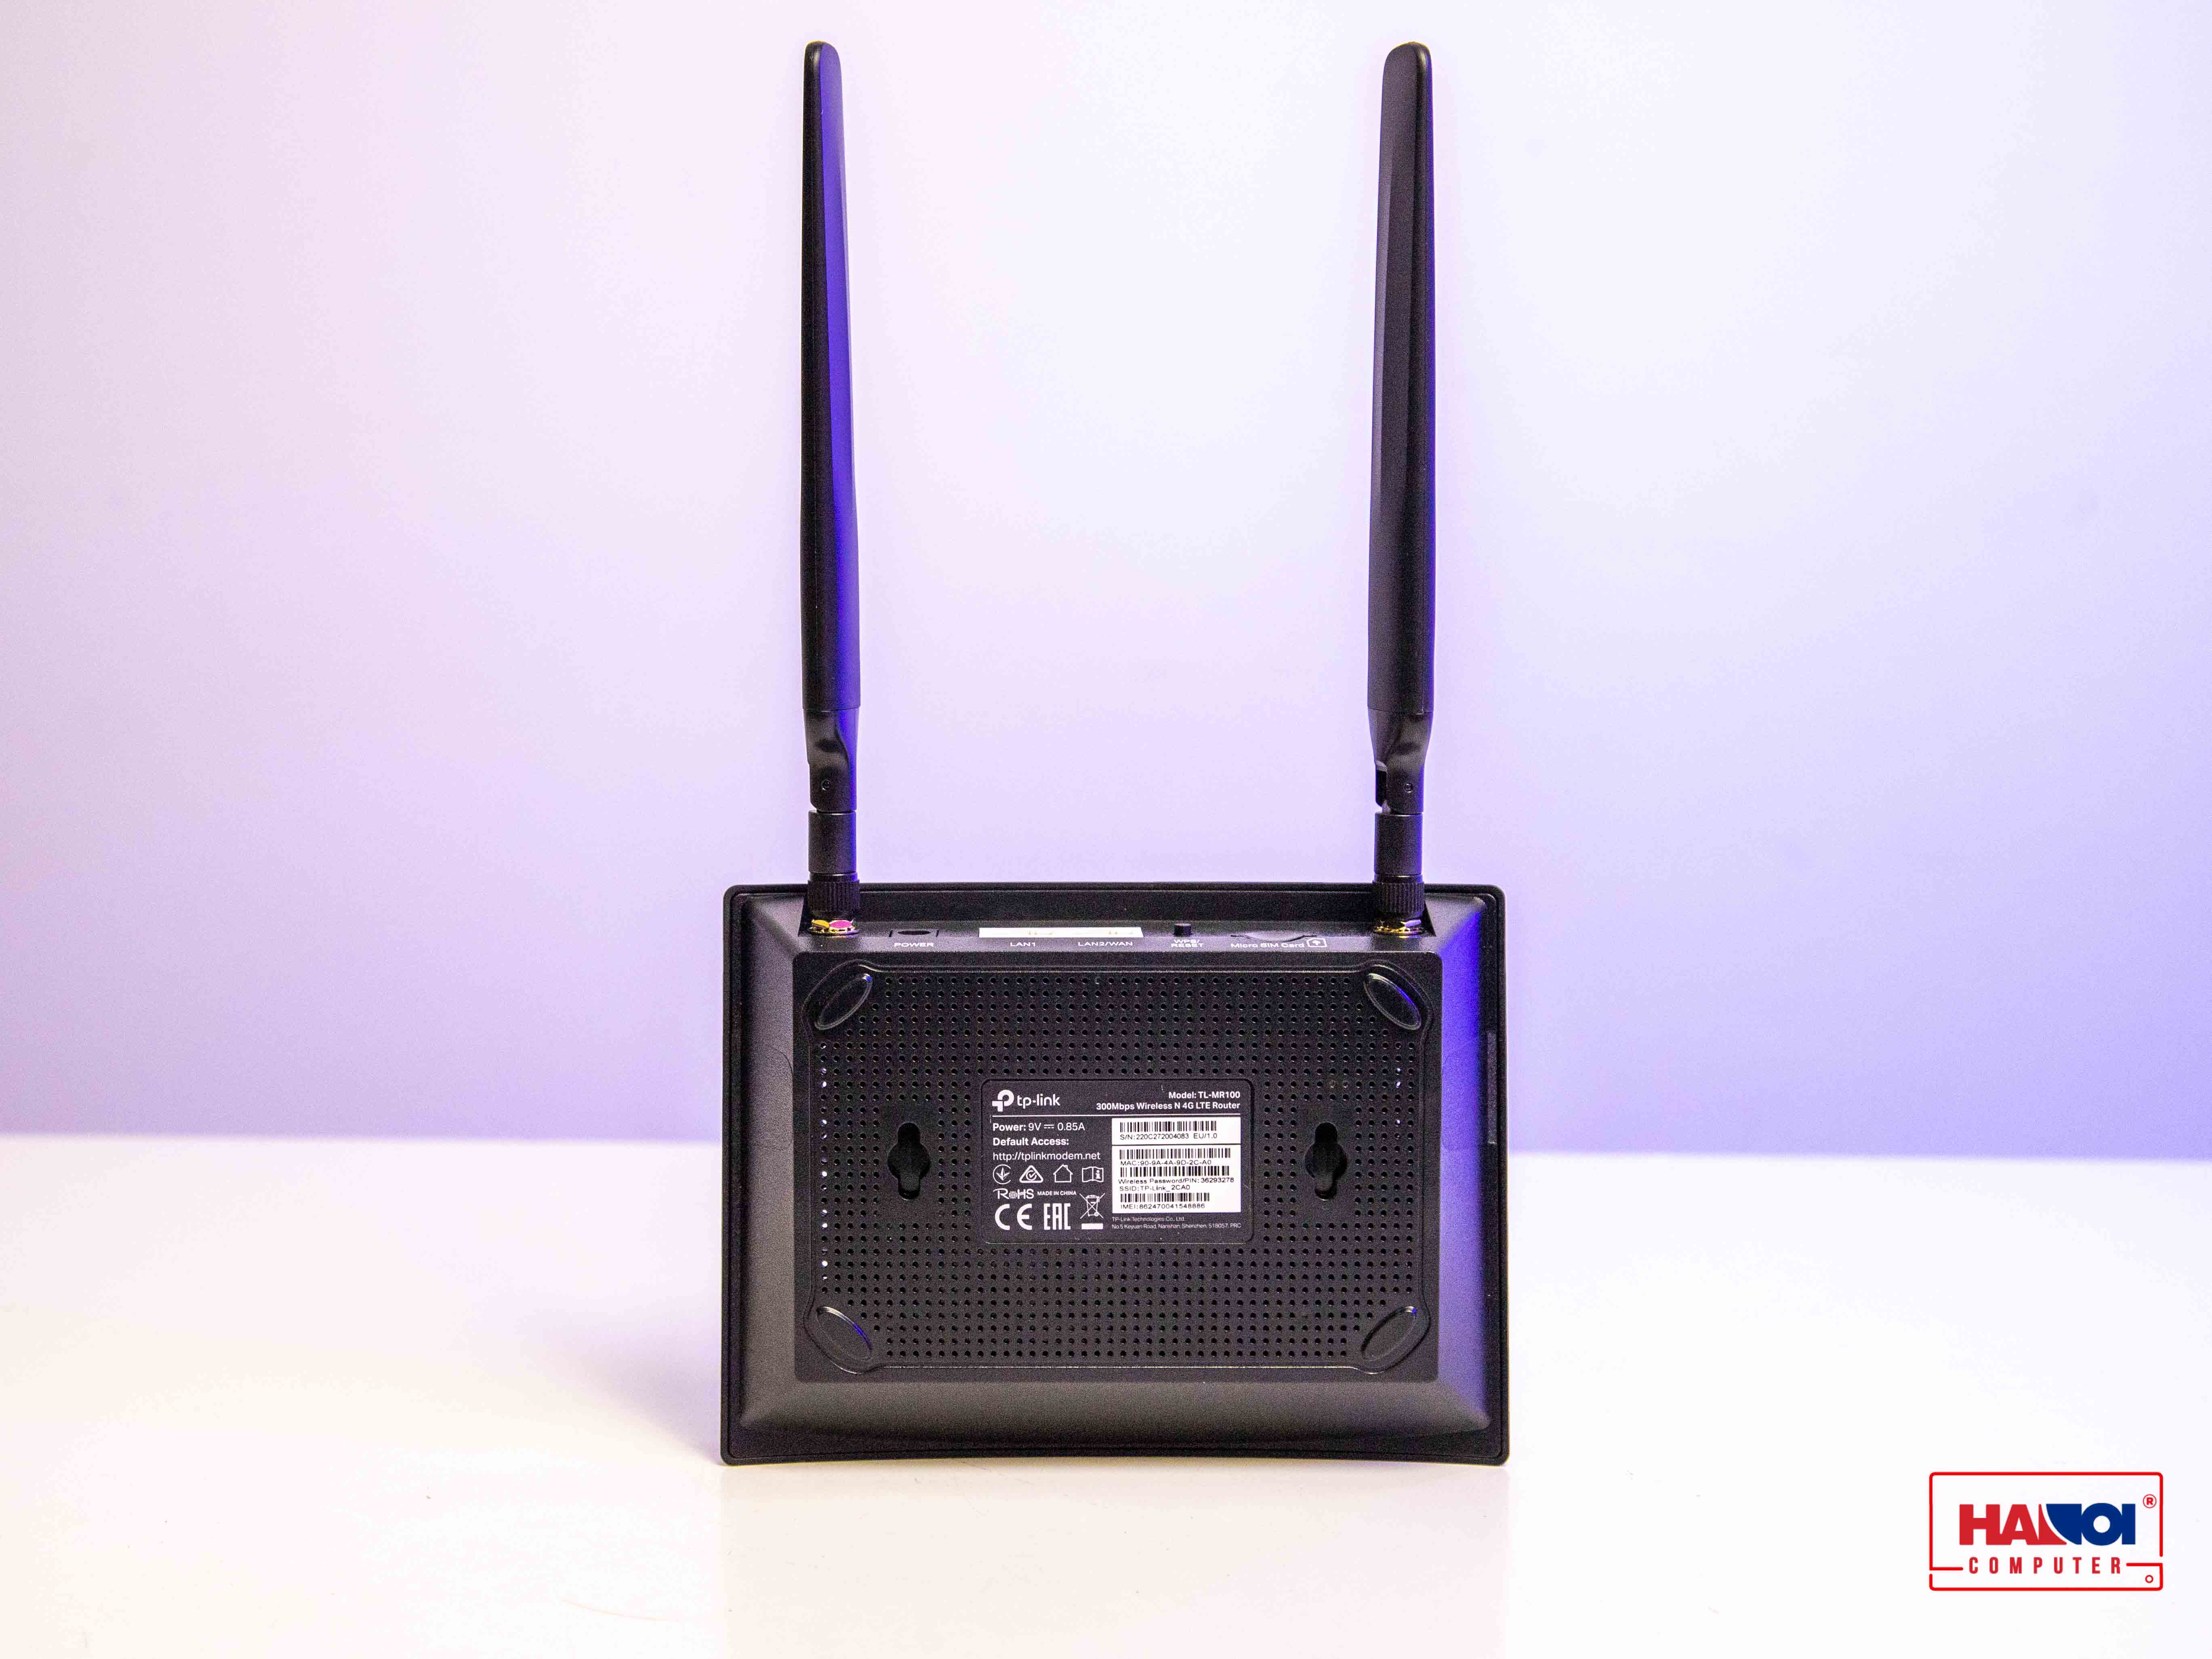 Bộ phát wifi 4G TP-Link MR100 Wireless N300